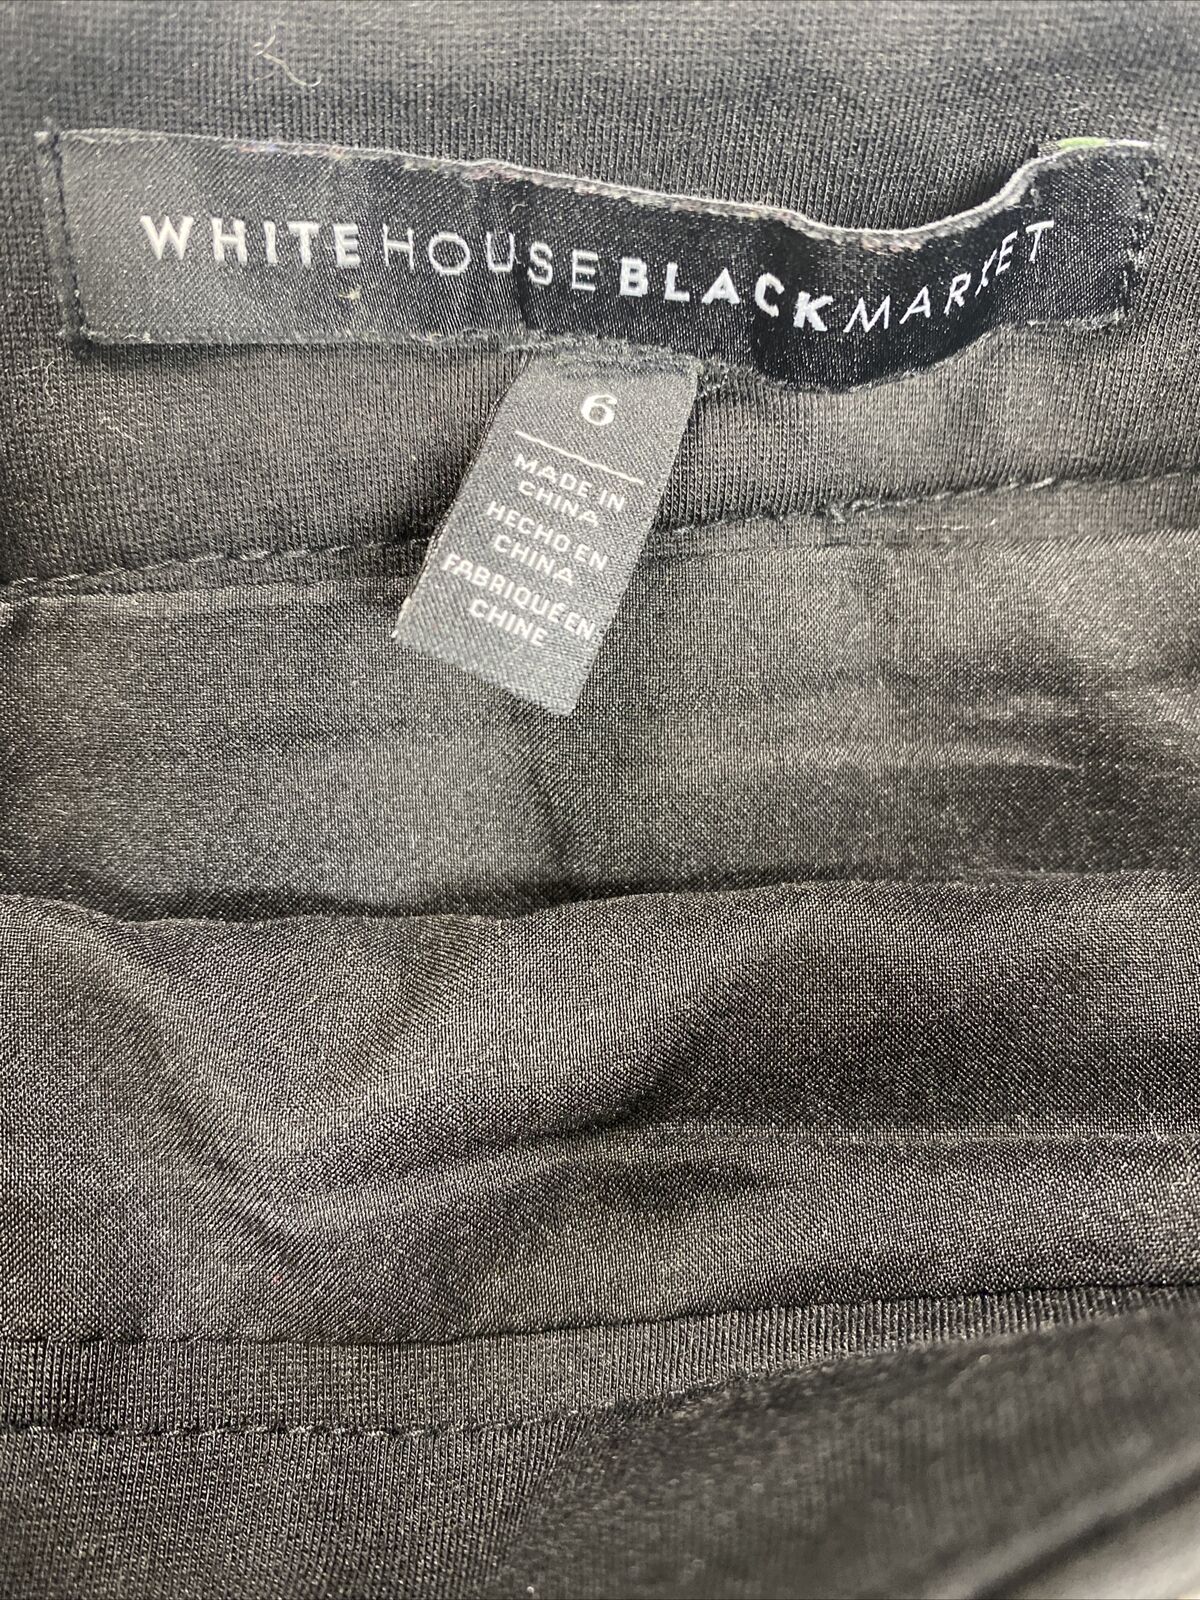 White House Black Market Women's Black Tweed Panel Pencil Skirt Sz 0